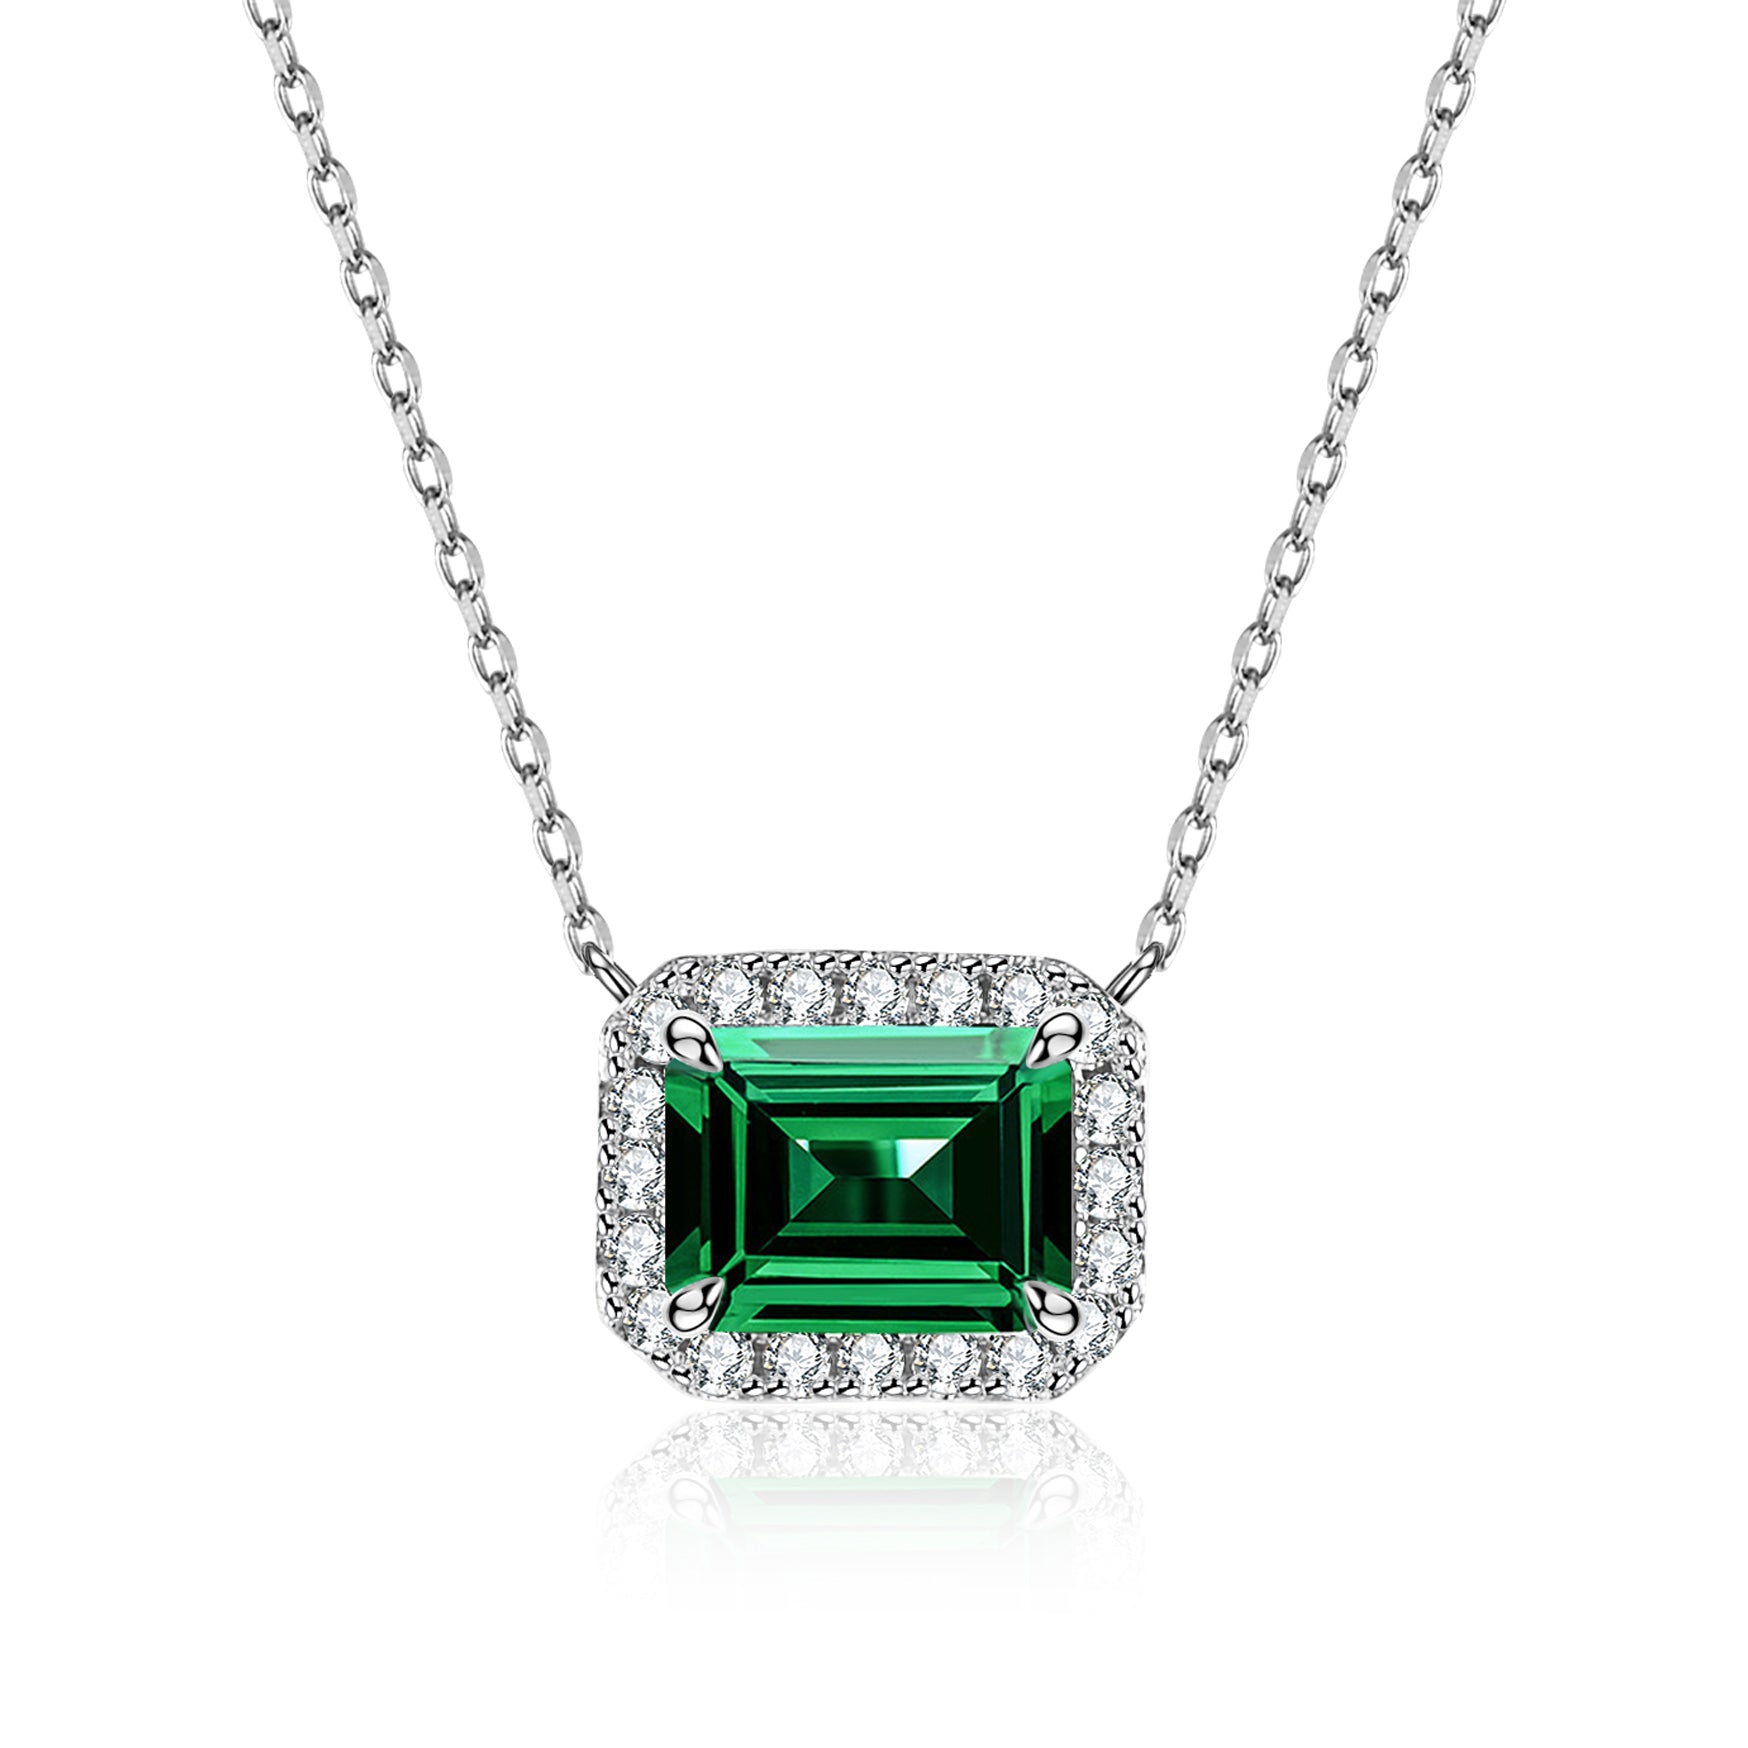 FairyLocus 3ct Emerald Cut Minimalism Sterling Silver Necklace FLCYBSNL27 FairyLocus